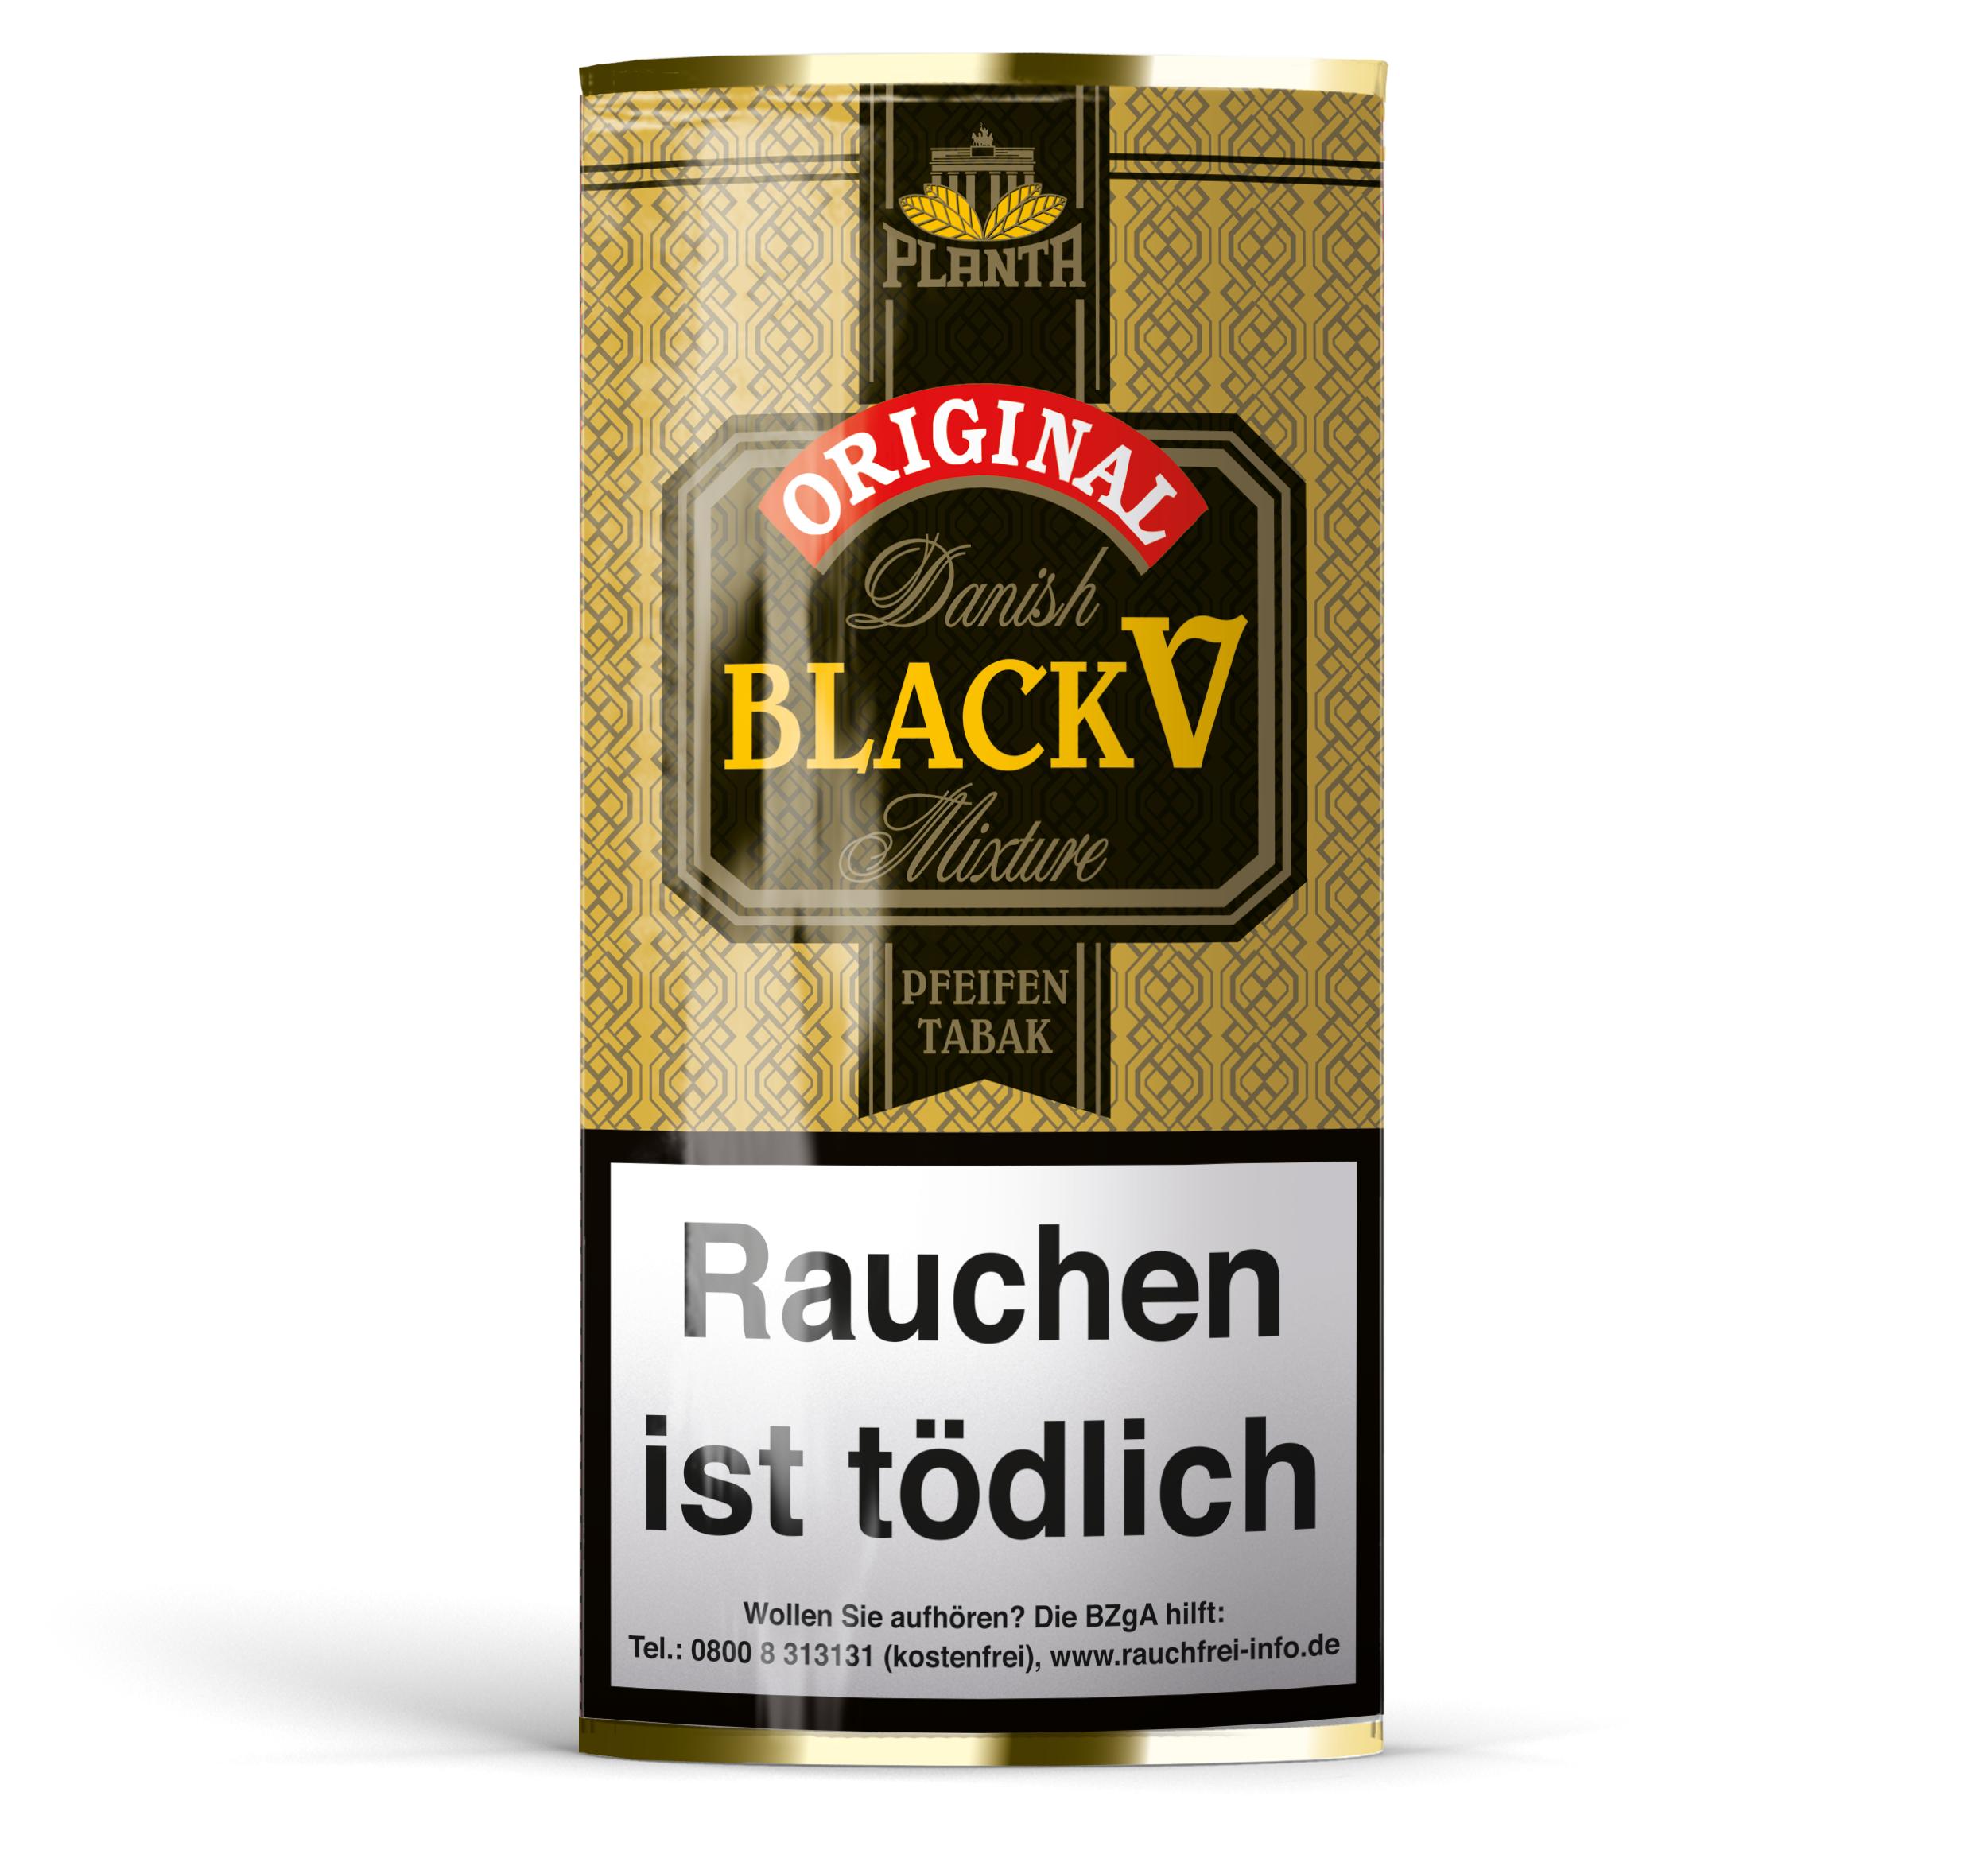 Danish Black V 1 x 40g Pfeifentabak 1 x 40g Krüll